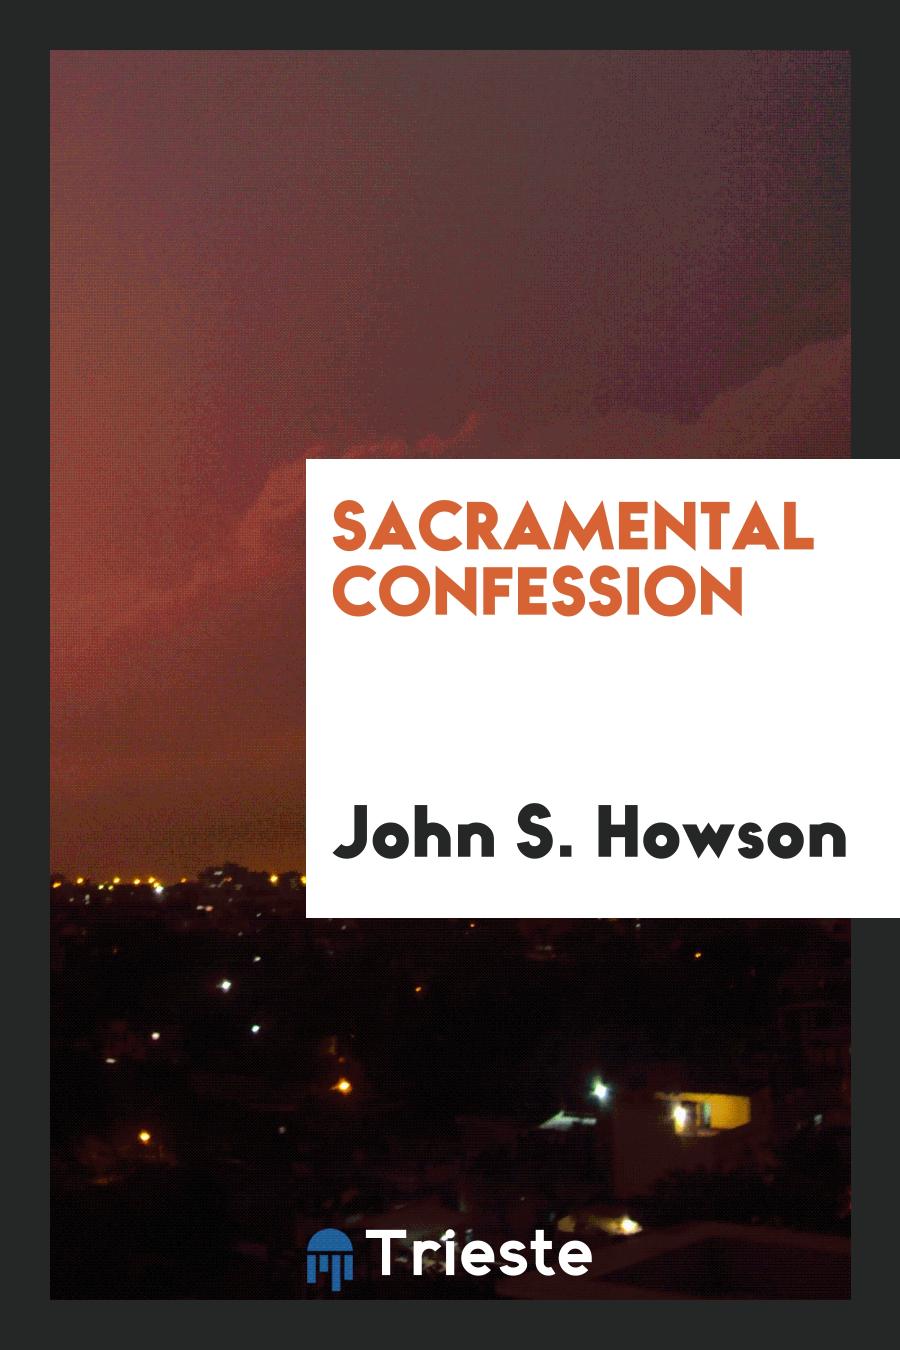 Sacramental confession